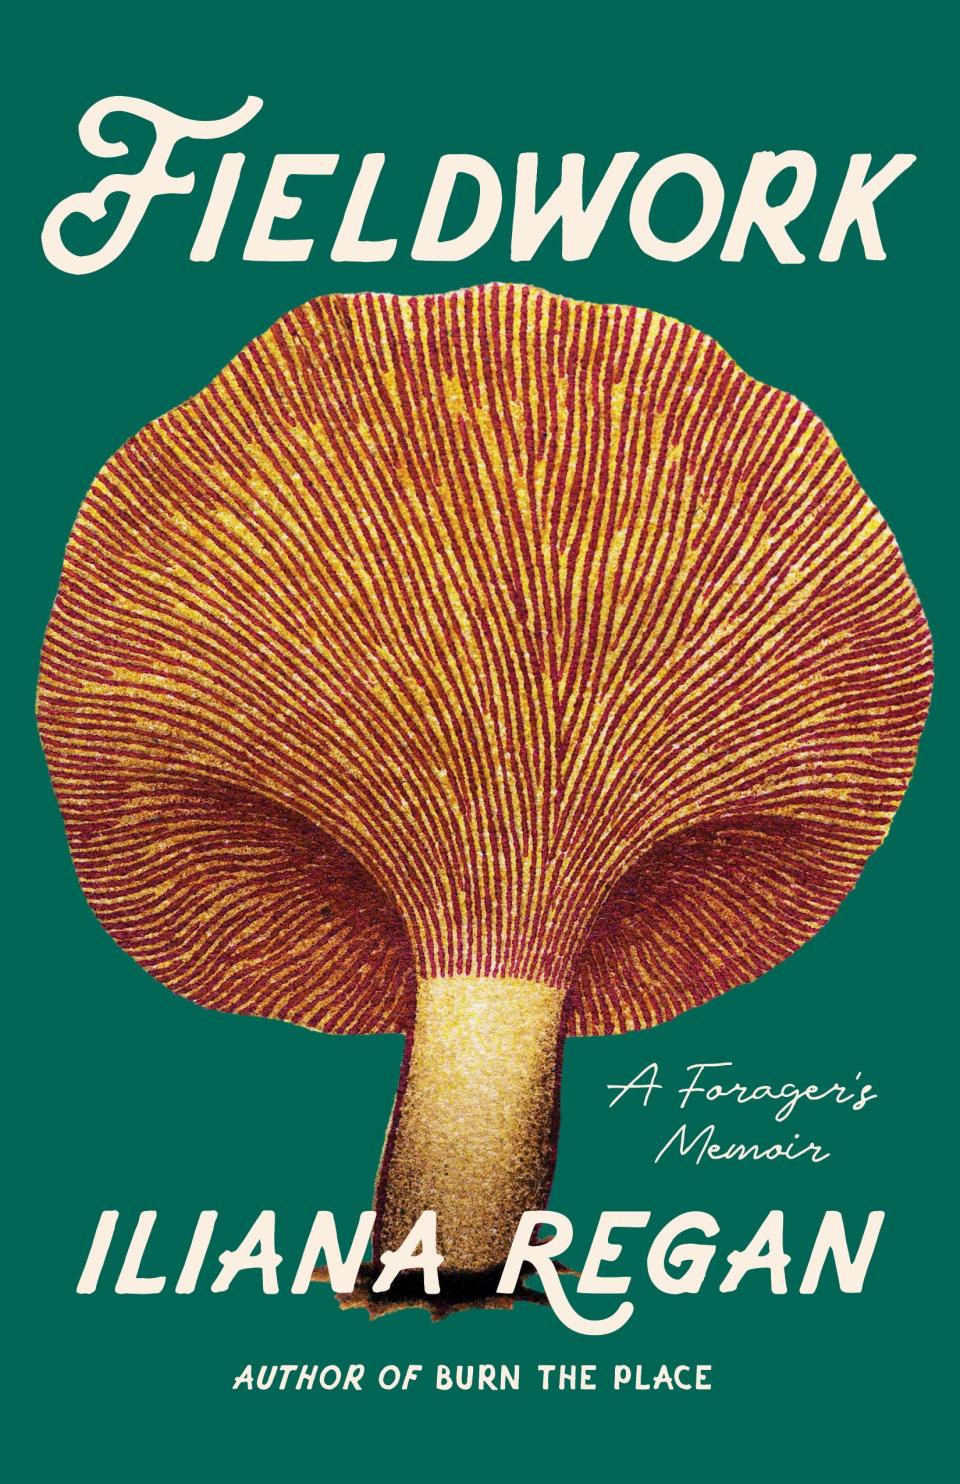 Fieldwork is a memoir by Michigan author and chef Iliana Regan.